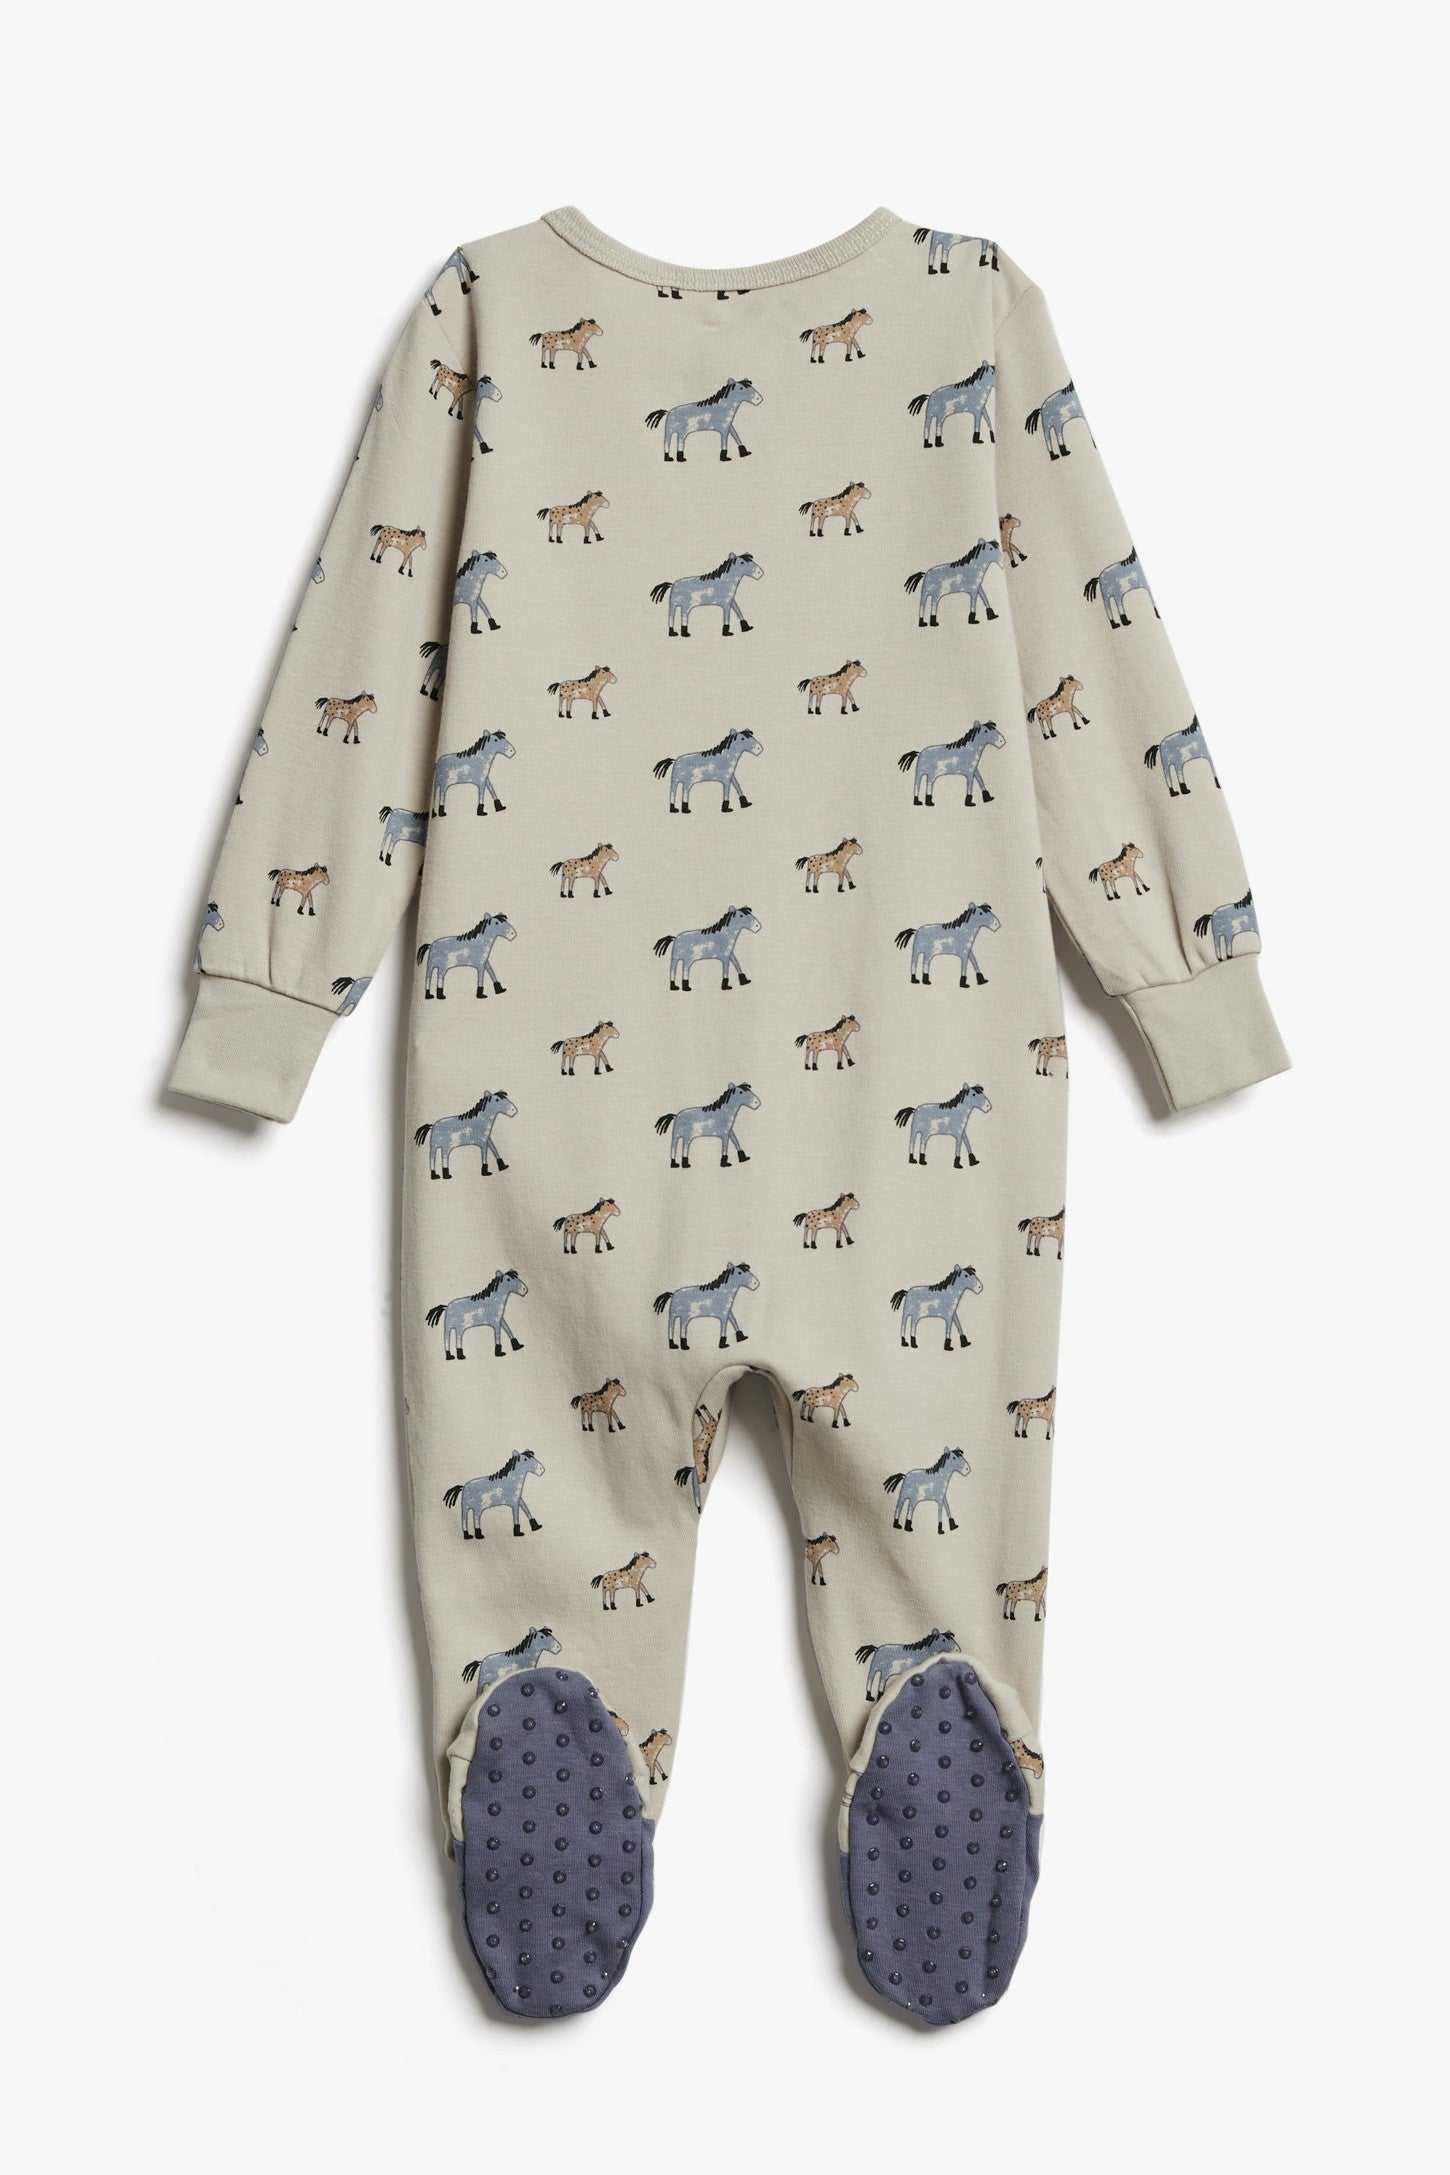 Pyjama 1-pièce imprimé, coton bio, 2T-3T - Bébé && BEIGE